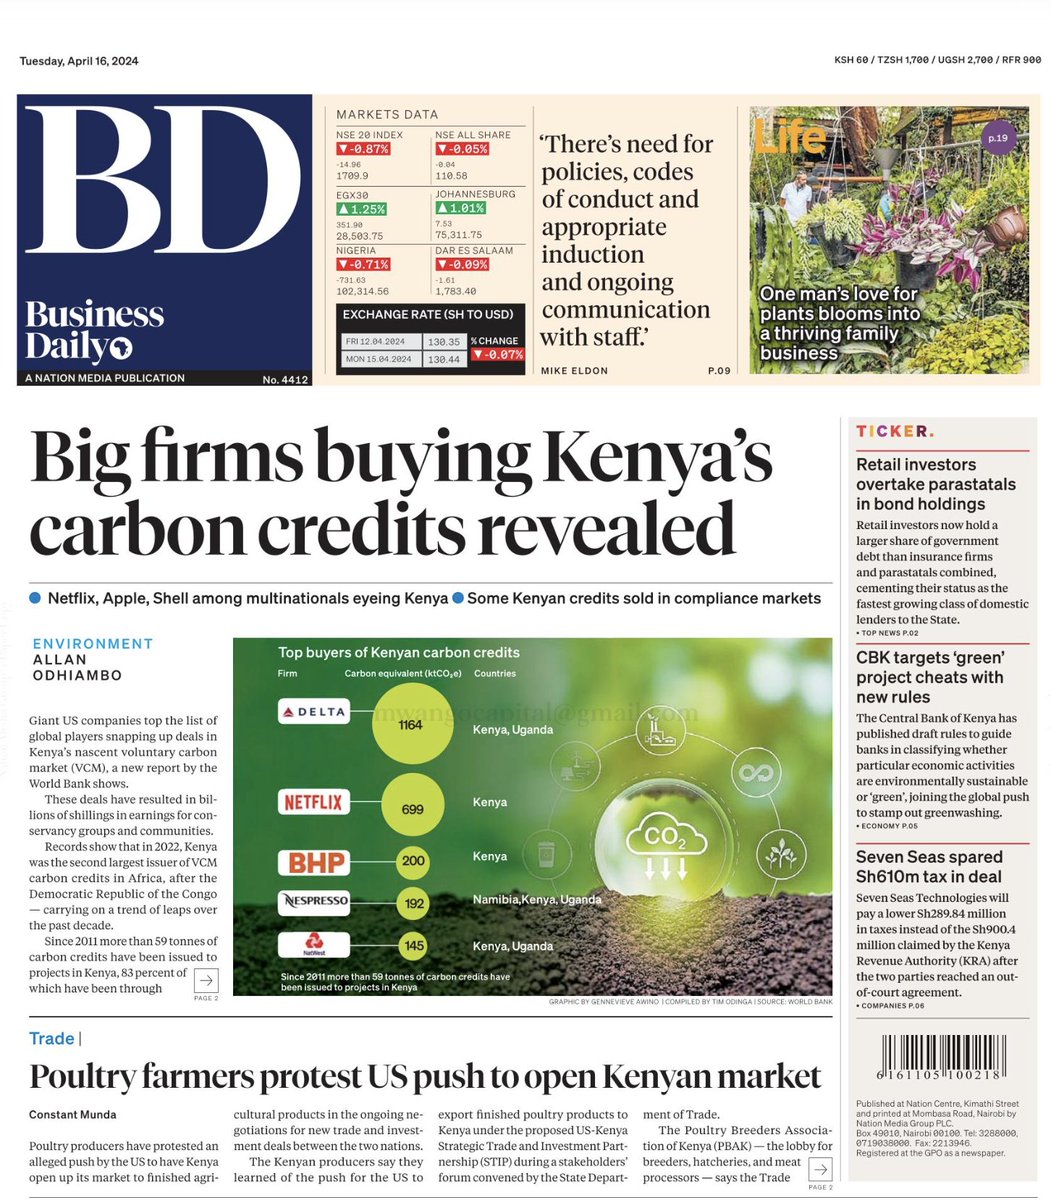 Top buyers of Kenya's carbon credits include Delta, NEtflix and BHP: